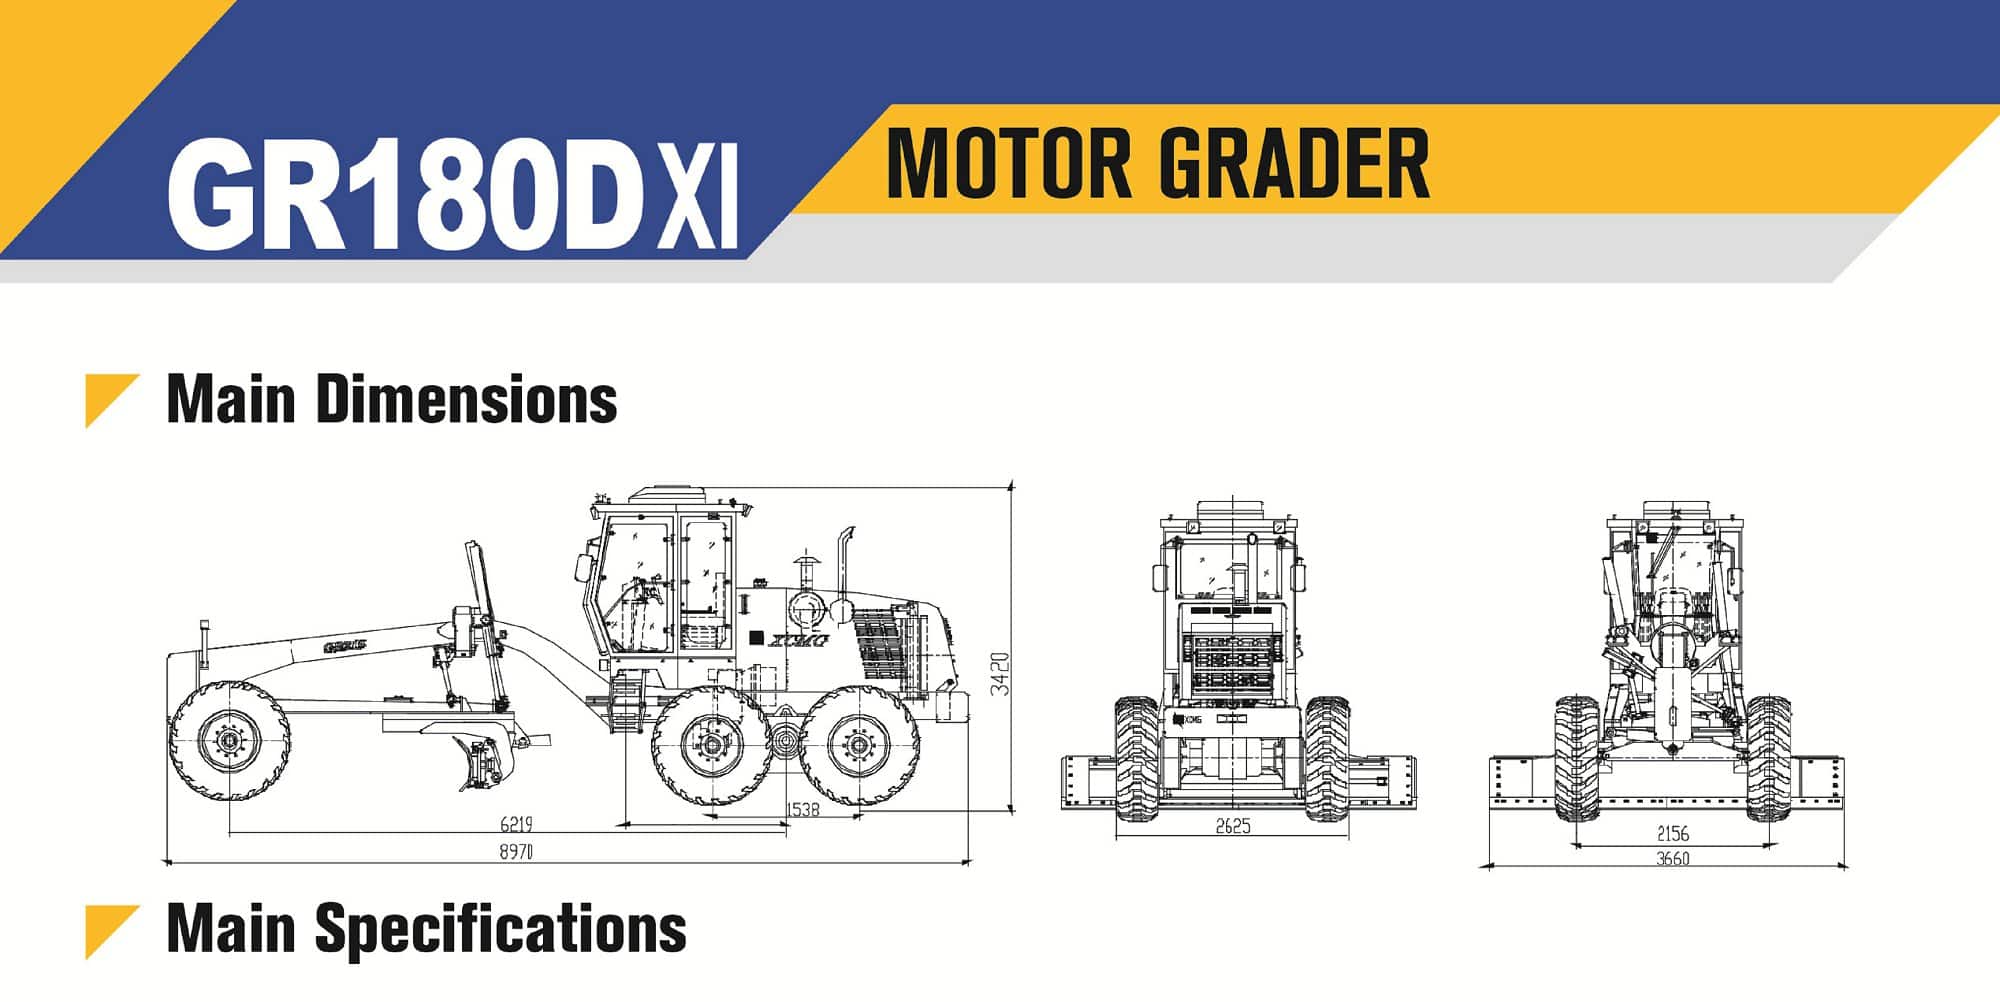 XCMG Official Motor Grader GR180D XI For Sale